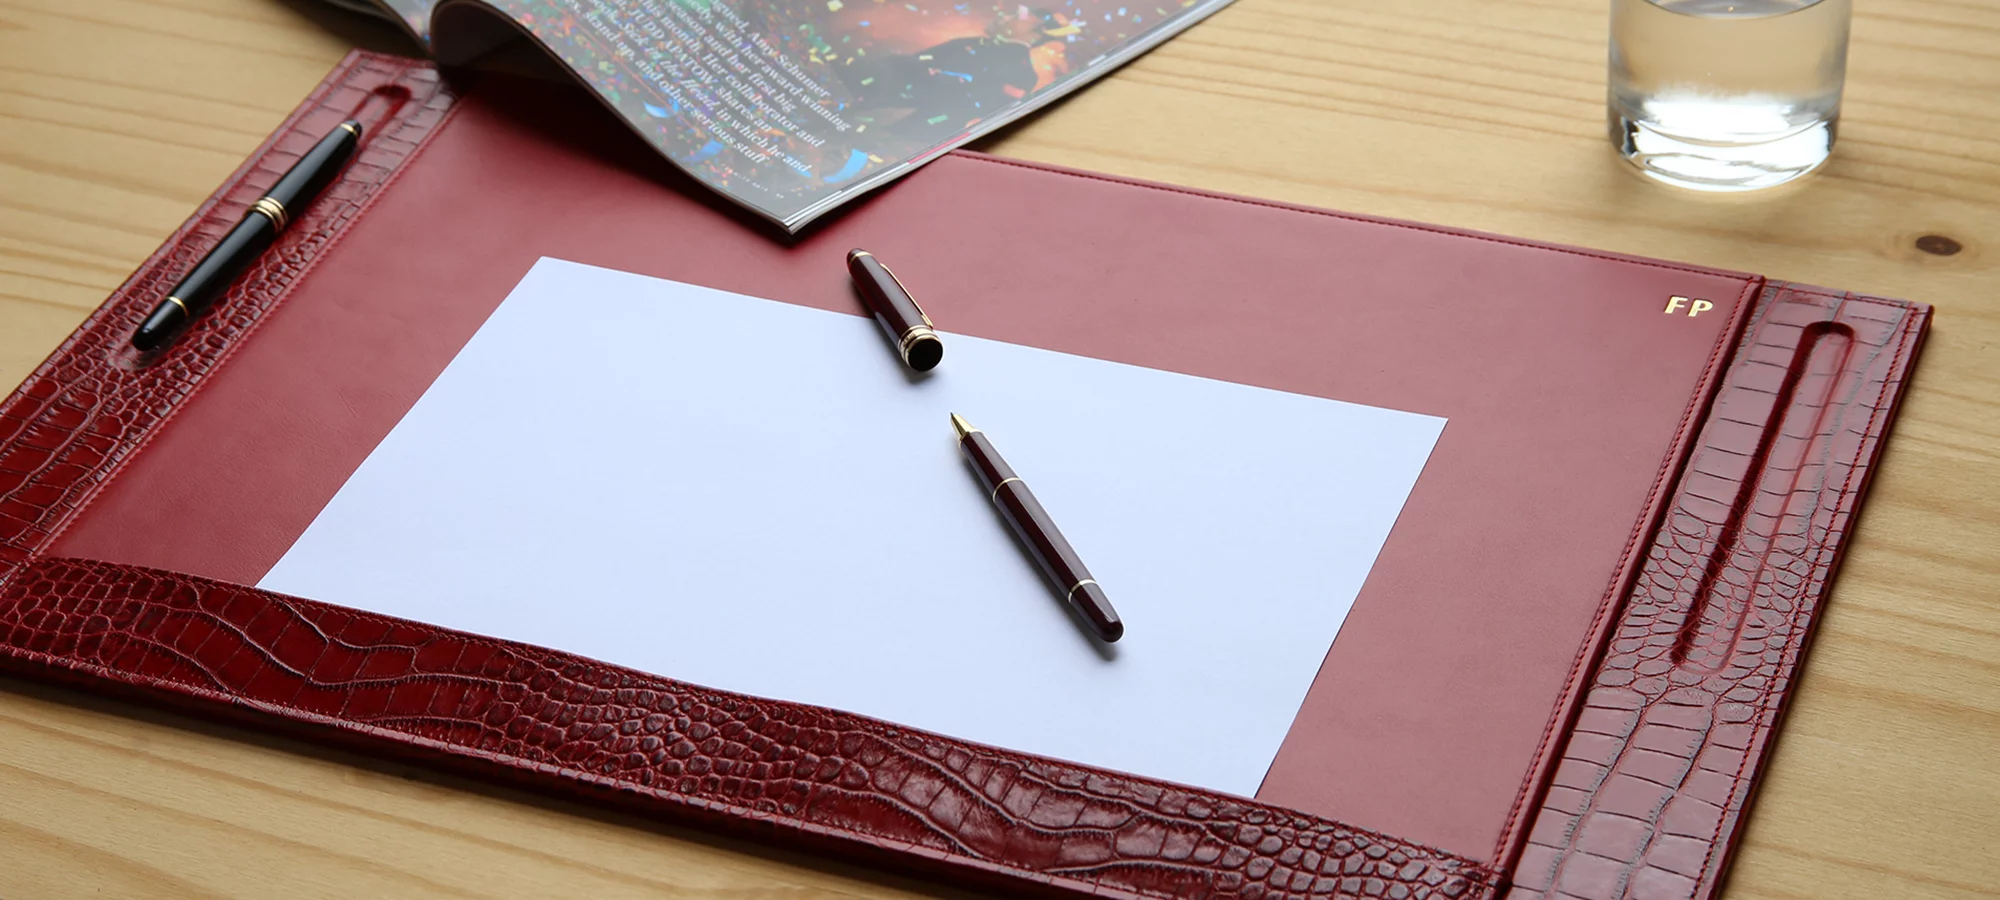 Desk Pad Blotter with Pen Slot (53.5 x 32 cm) - Orange - Smooth Leather